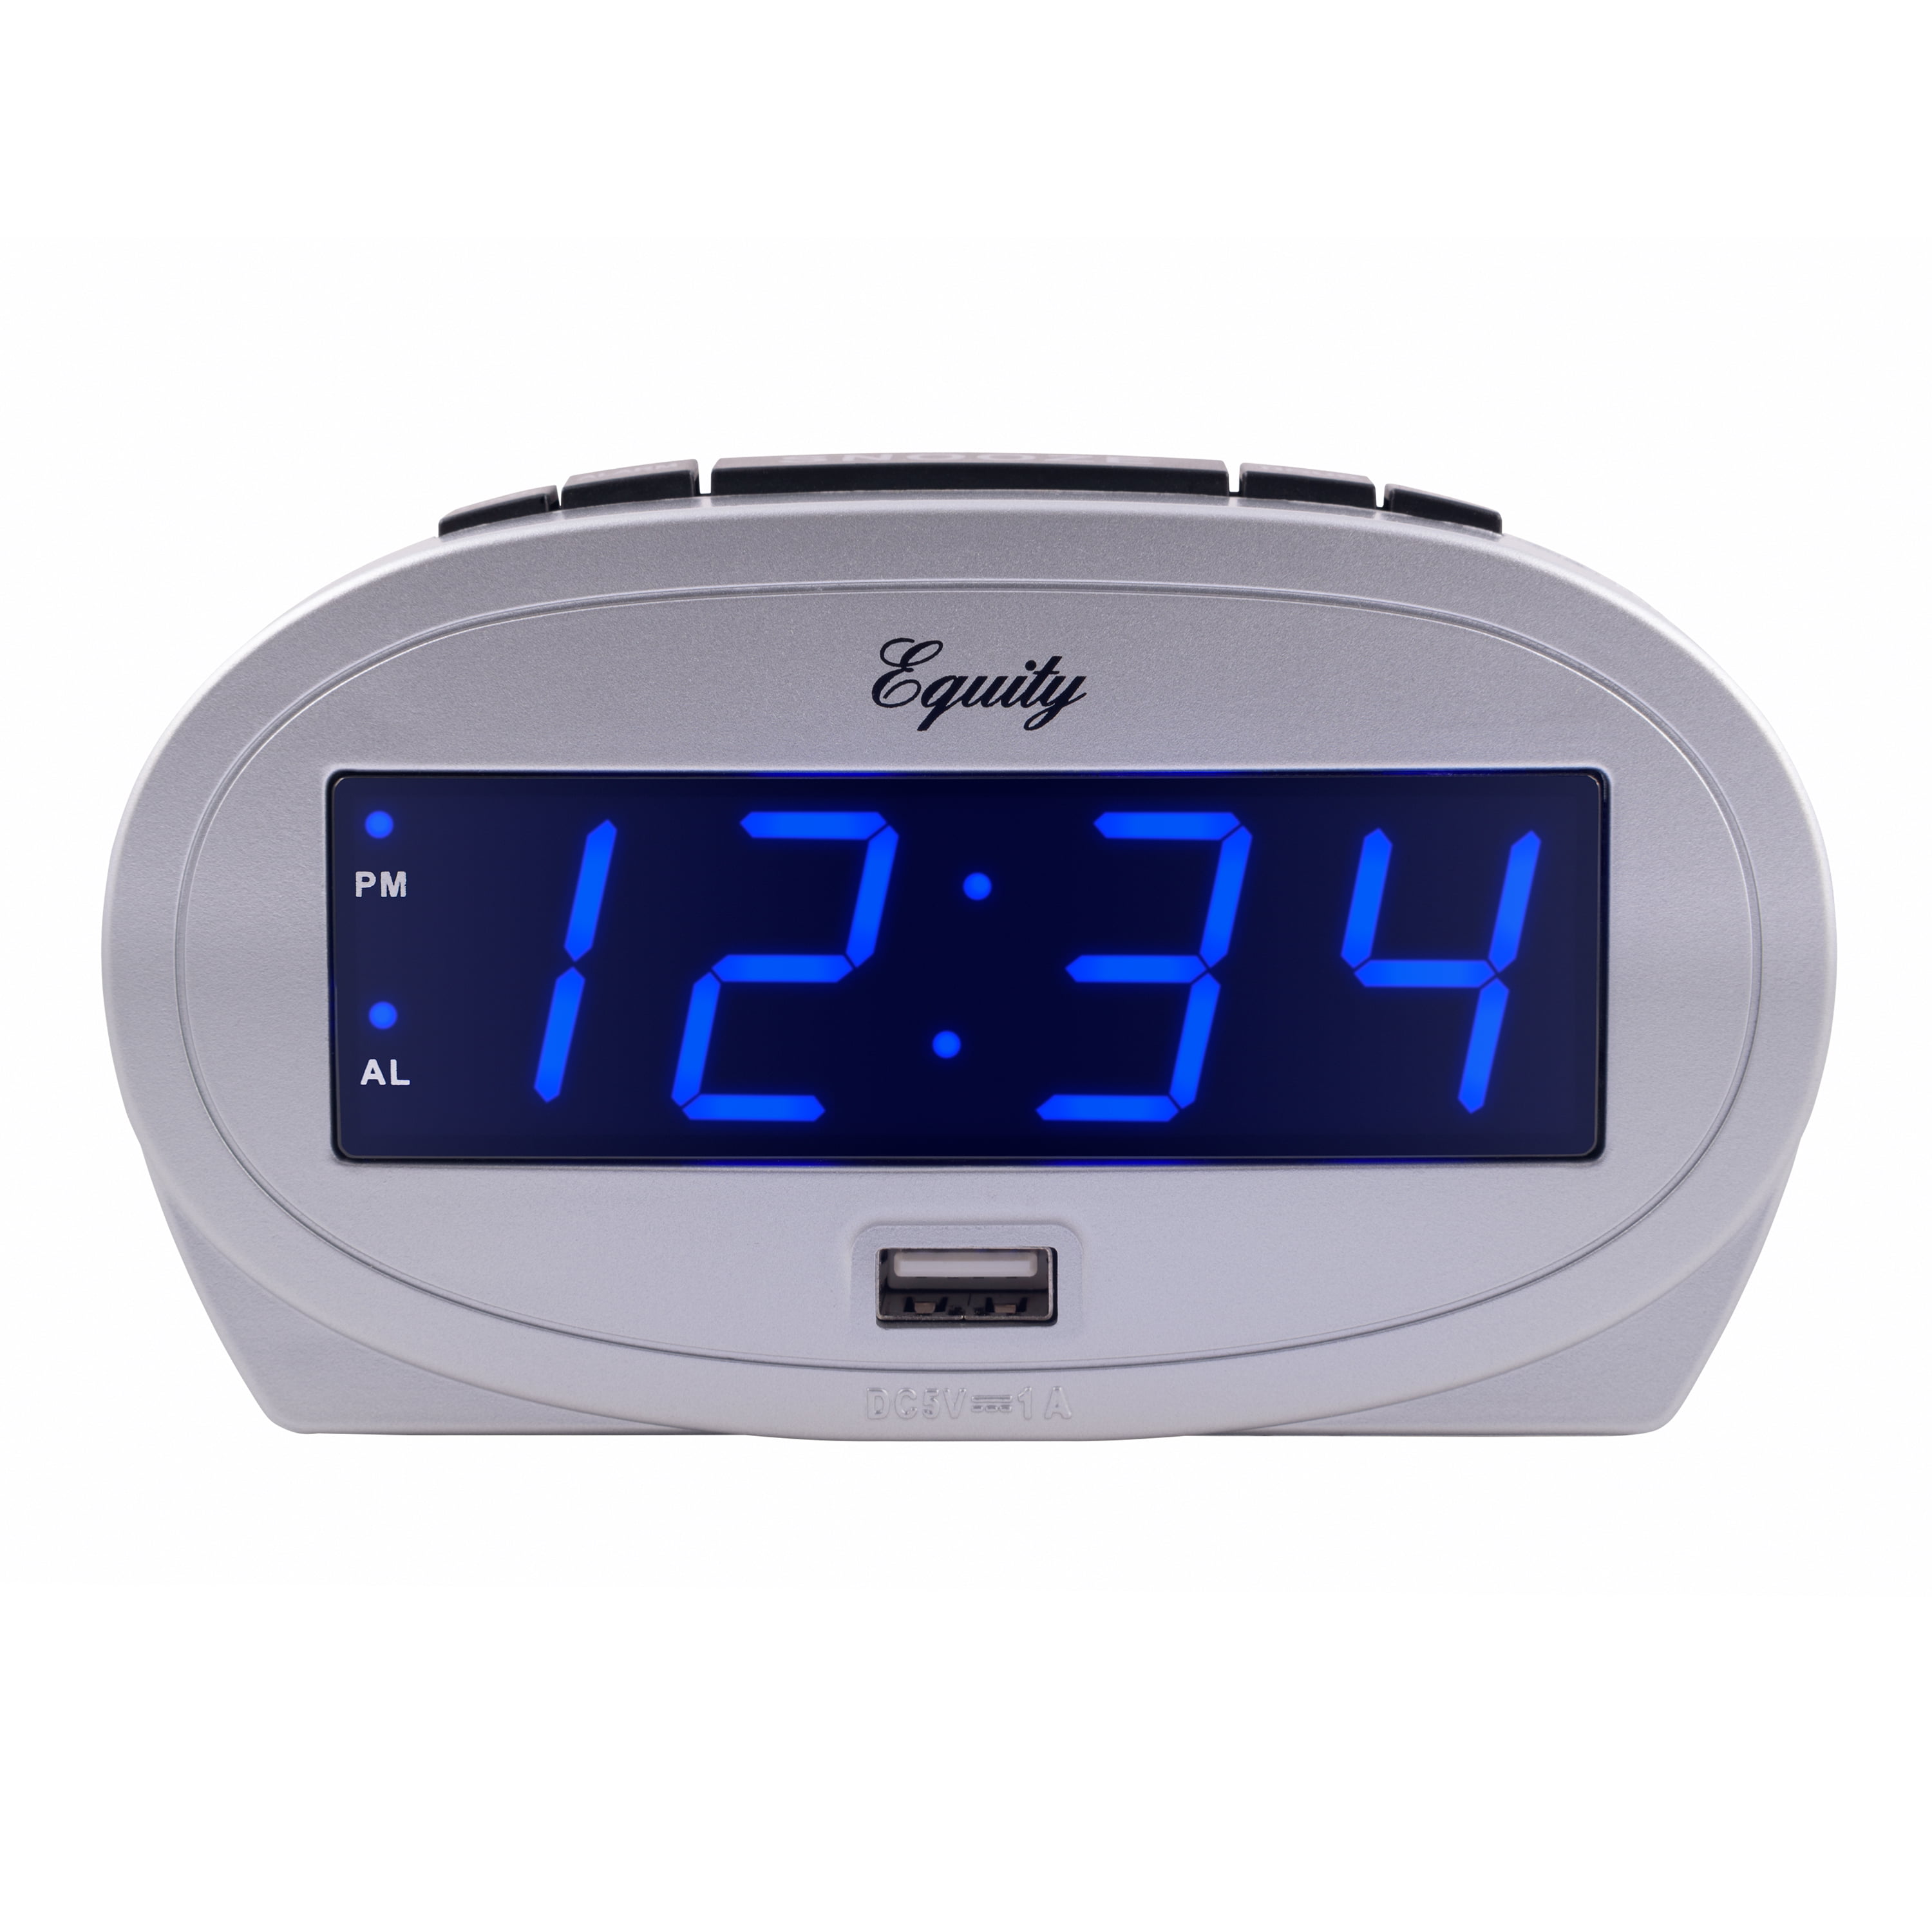 Equity by La Crosse 75903 0.9" Blue LED Digital Desktop Alarm Clock 